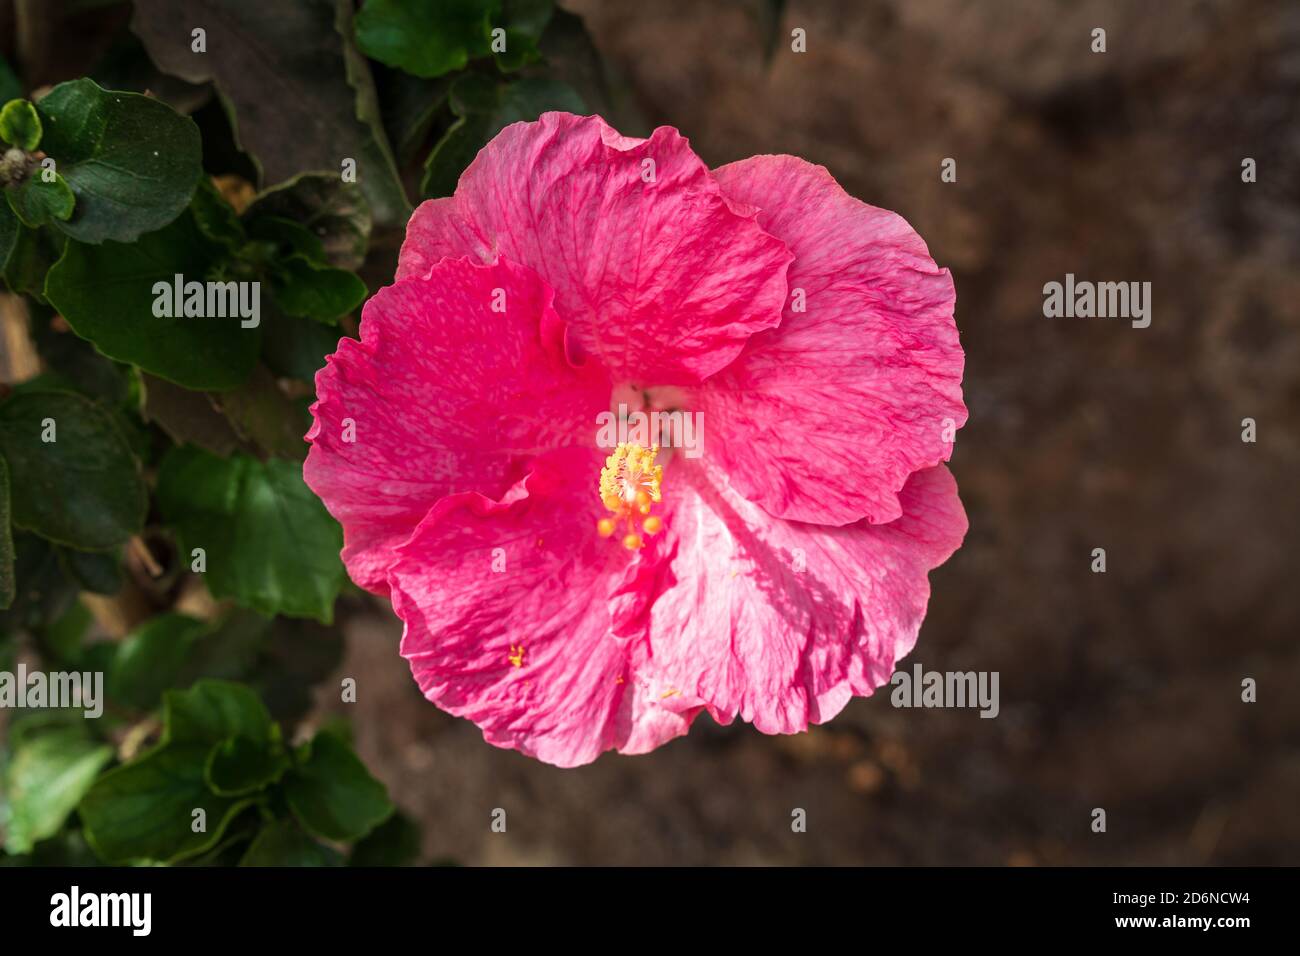 Flower of Thespesia grandiflora in the city garden. Stock Photo